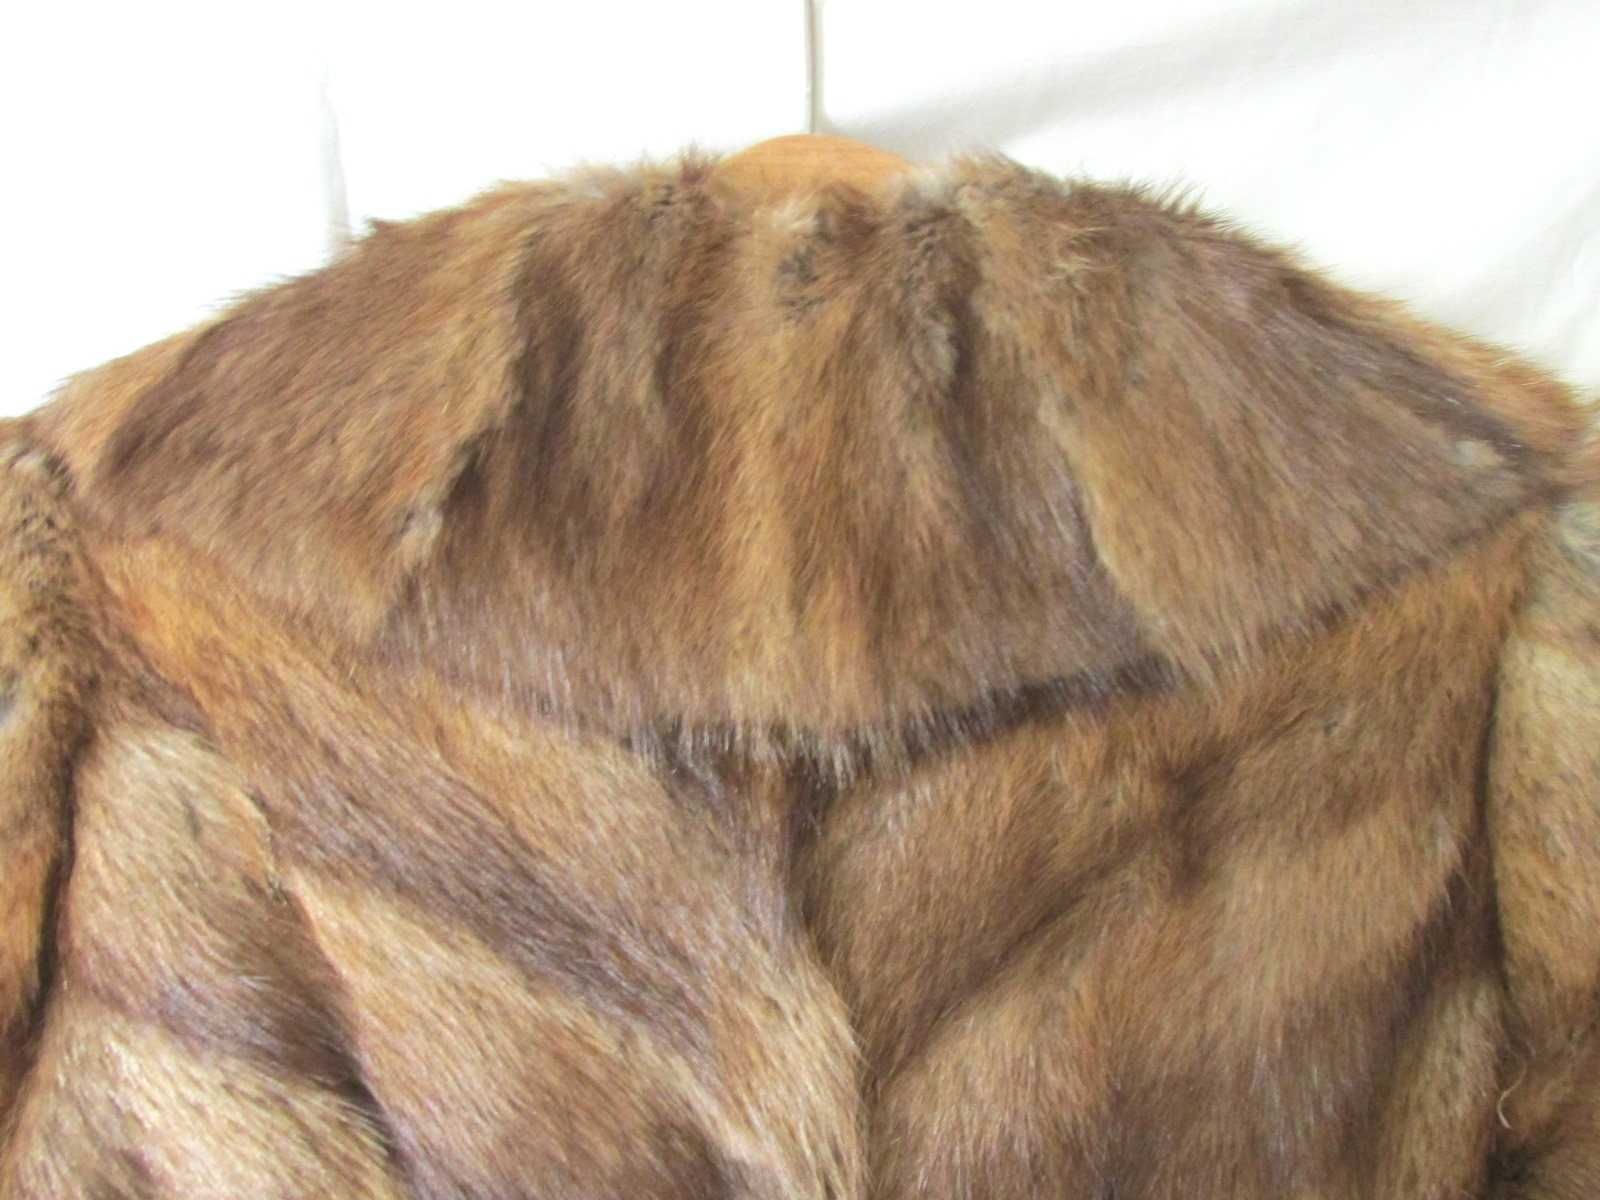 Haina lunga din blana naturala, spate bizam, mas. 46, model clasic